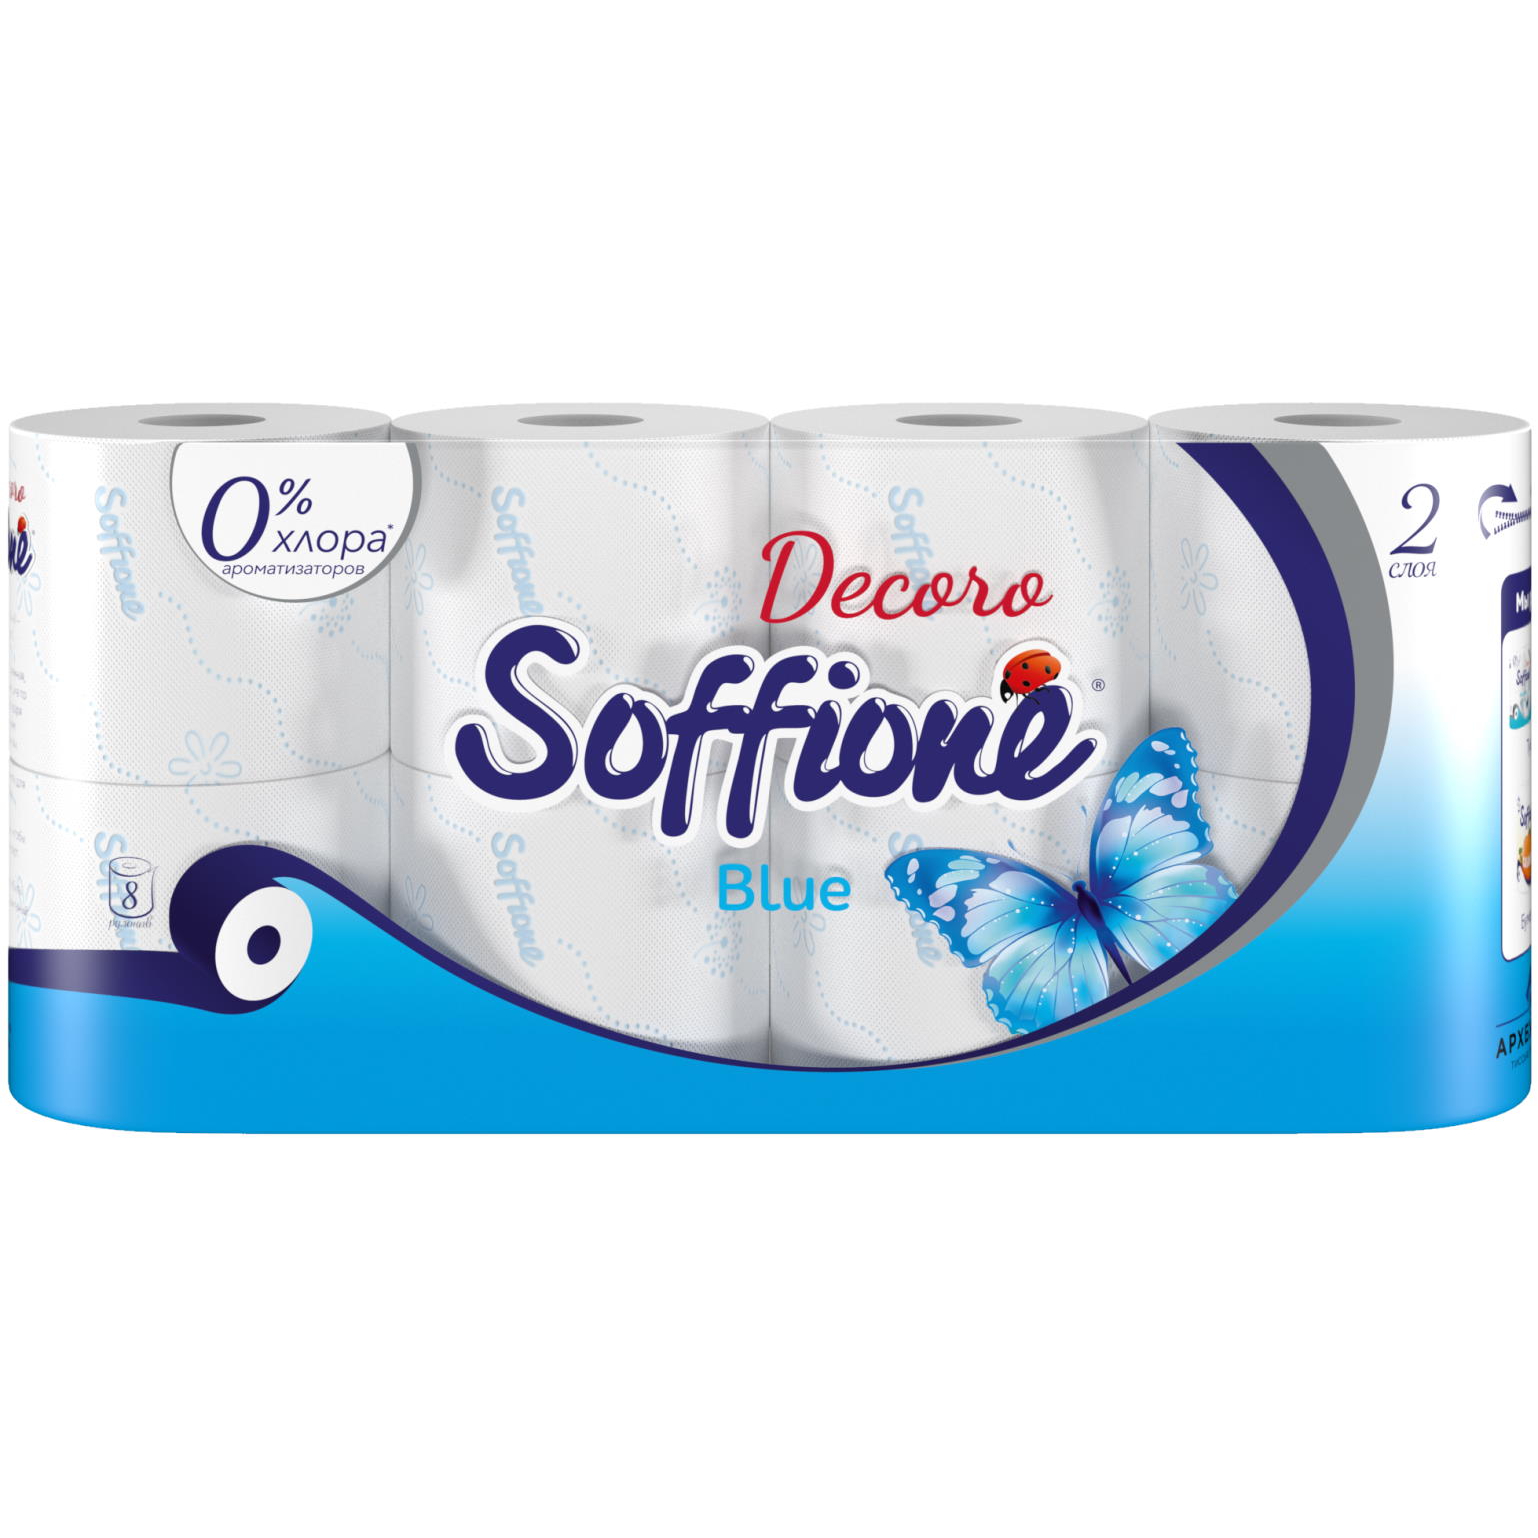 Бумага Soffione decoro blue 2 слоя, 8 рулонов